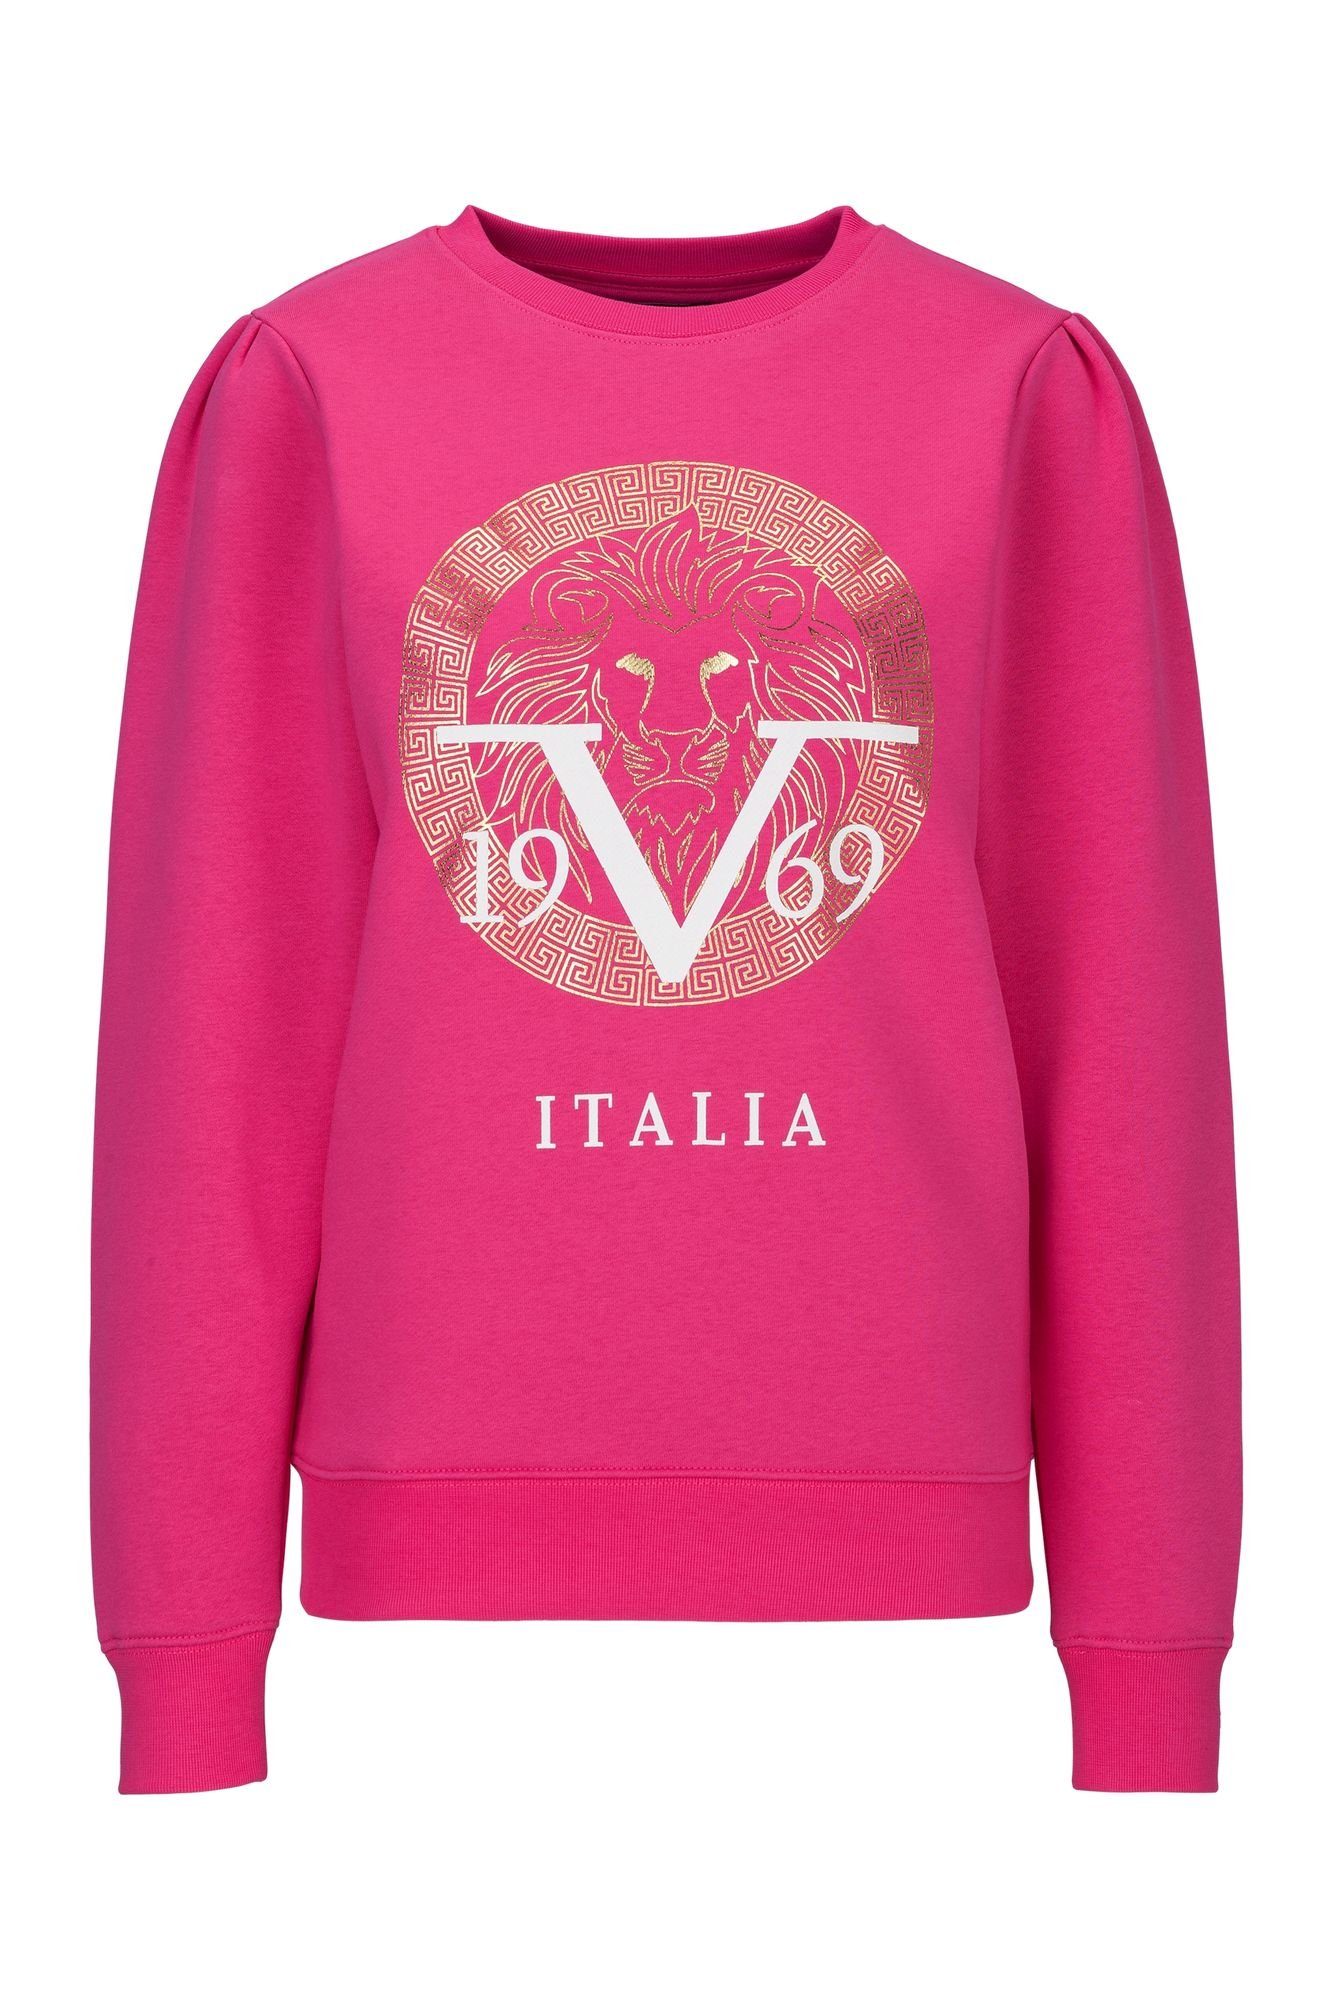 19V69 Italia by Versace Sweatshirt Erika